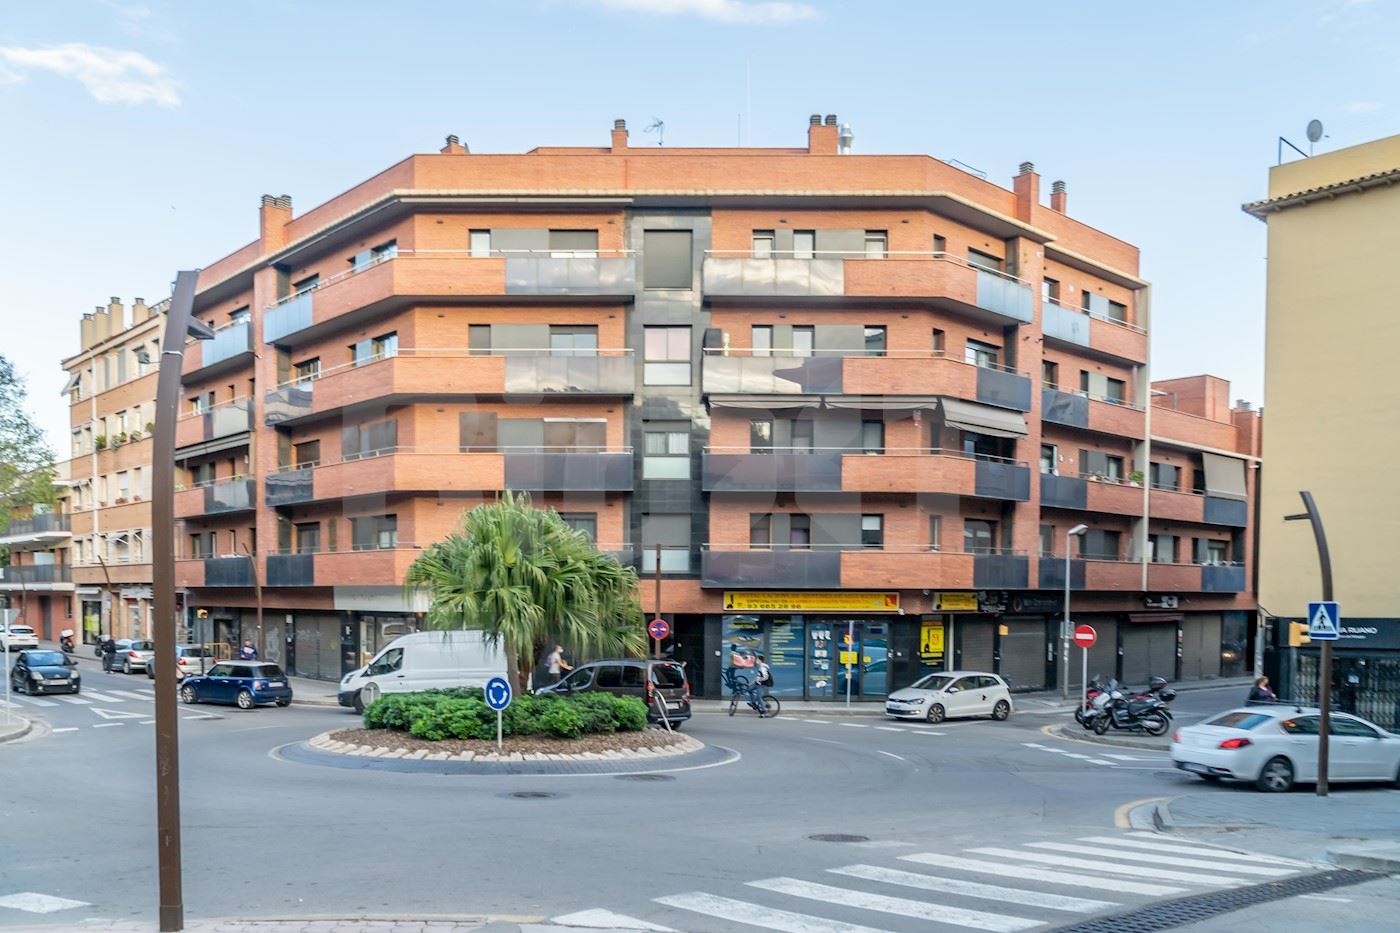 Calle Doctor Trueta, Centre, Castelldefels, Barcelona 1/11